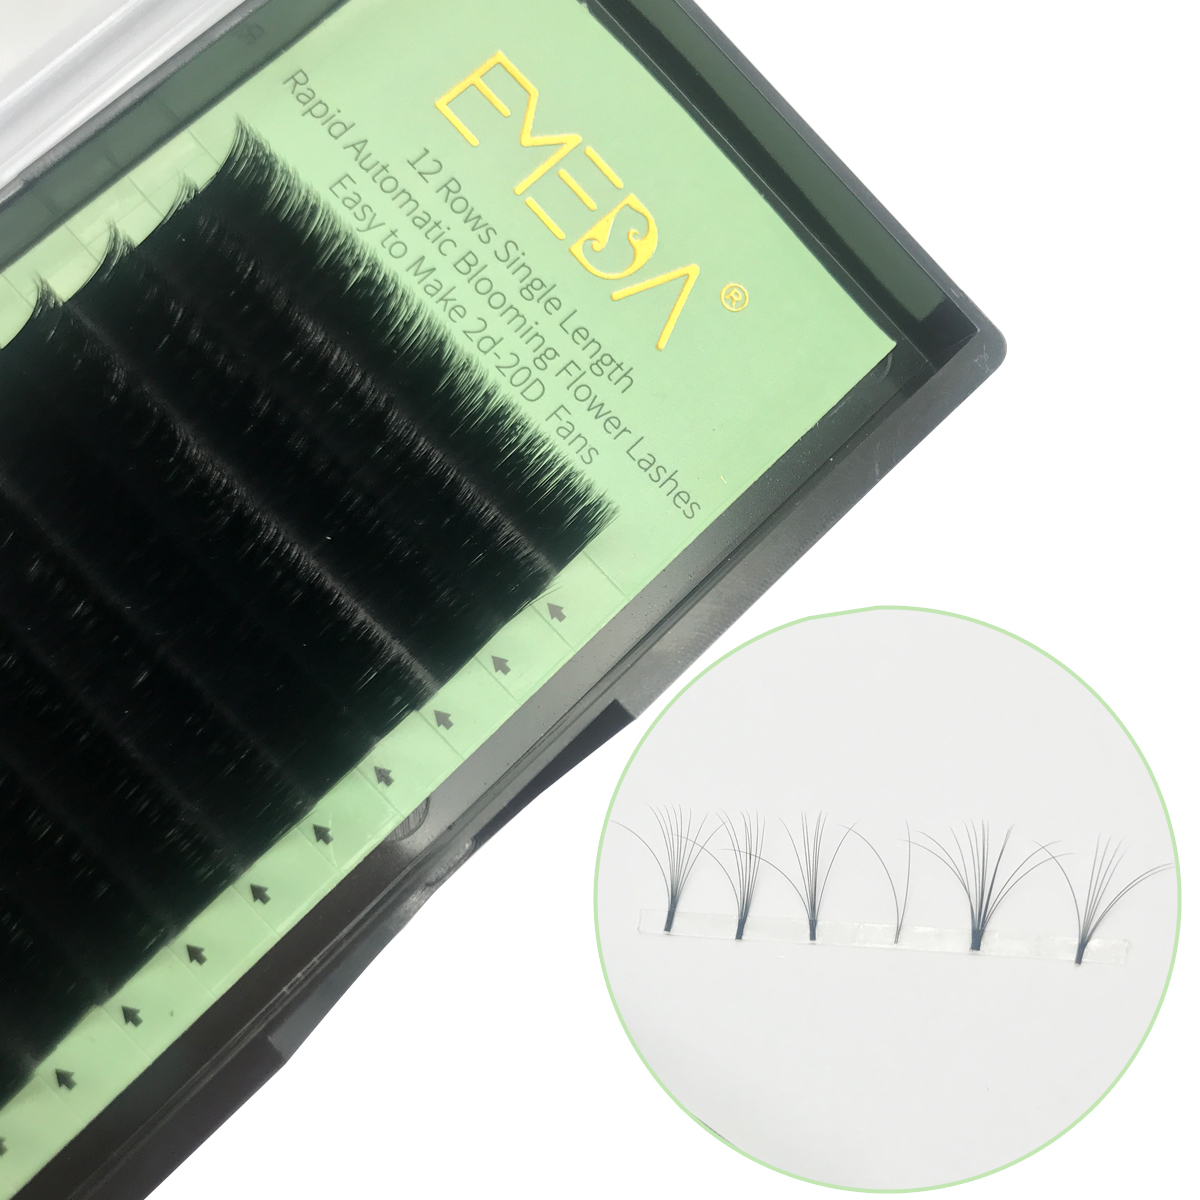 Premium Eyelash Supplier Sell Easy-Fan Blooming Eyelash Extensions UK USA Free Samples Accepted YY65